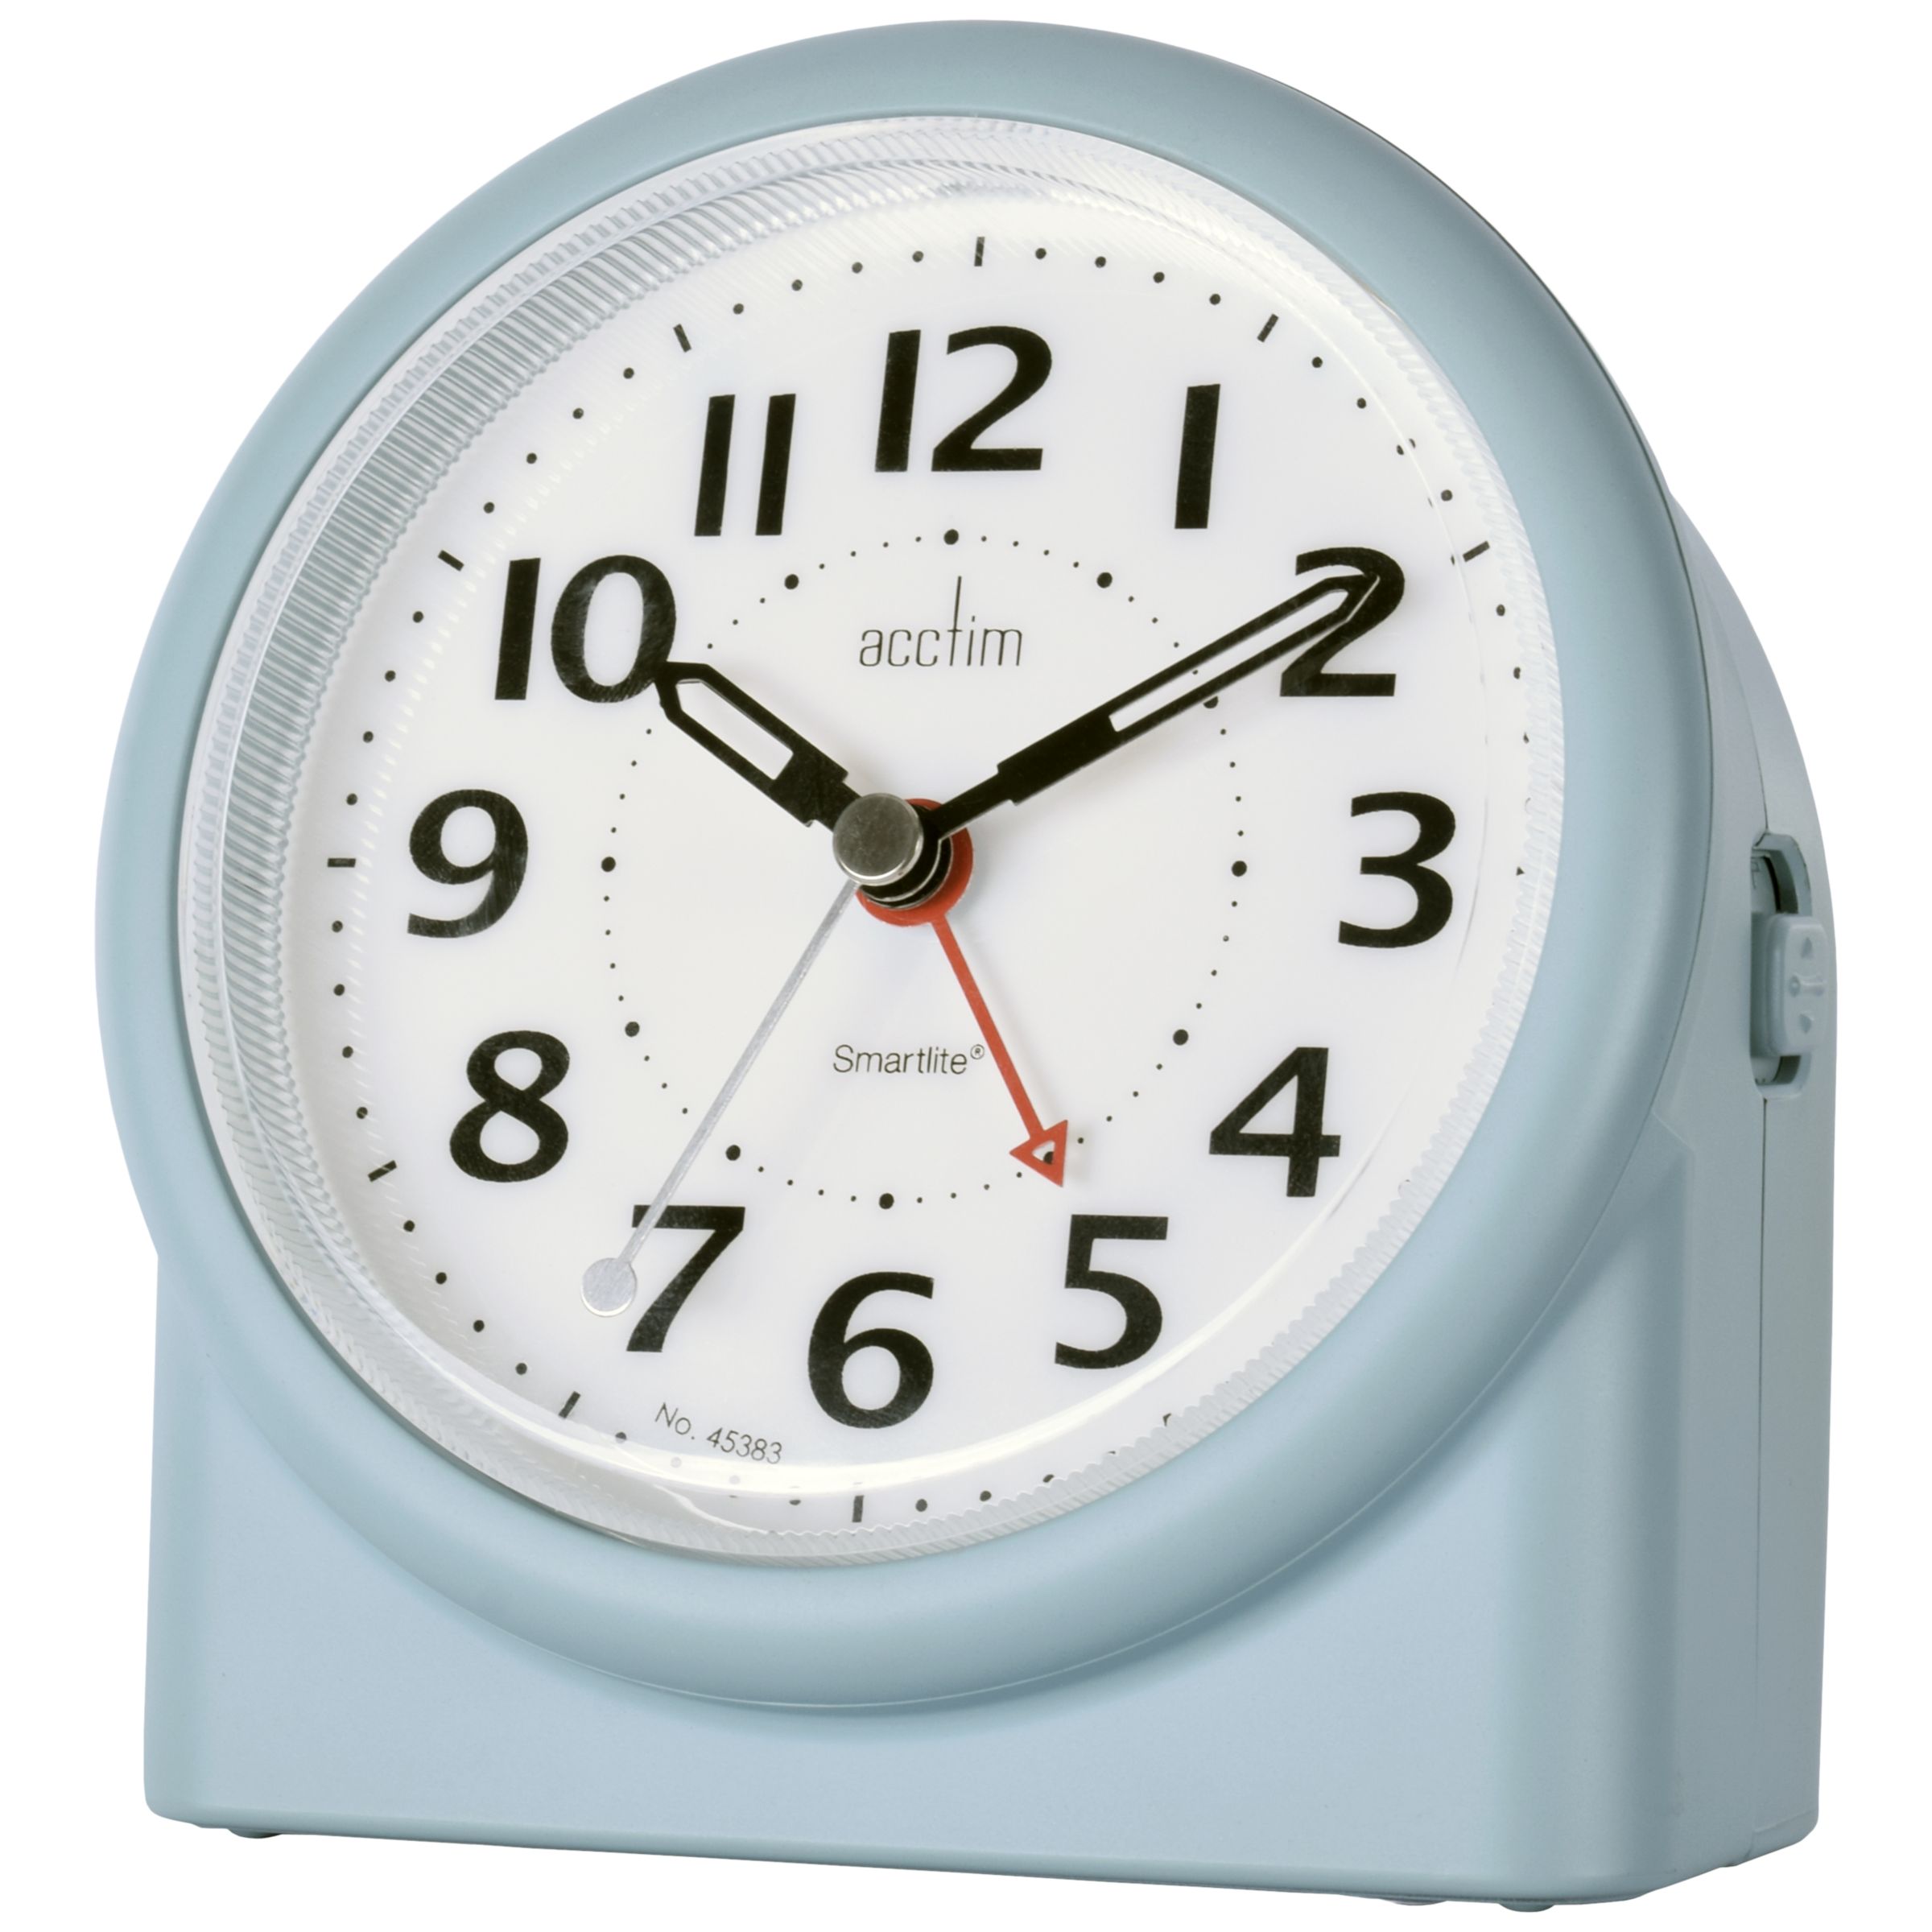 Acctim 14289 Central Smartlite® Sweep Alarm Clock in Ocean Blue 